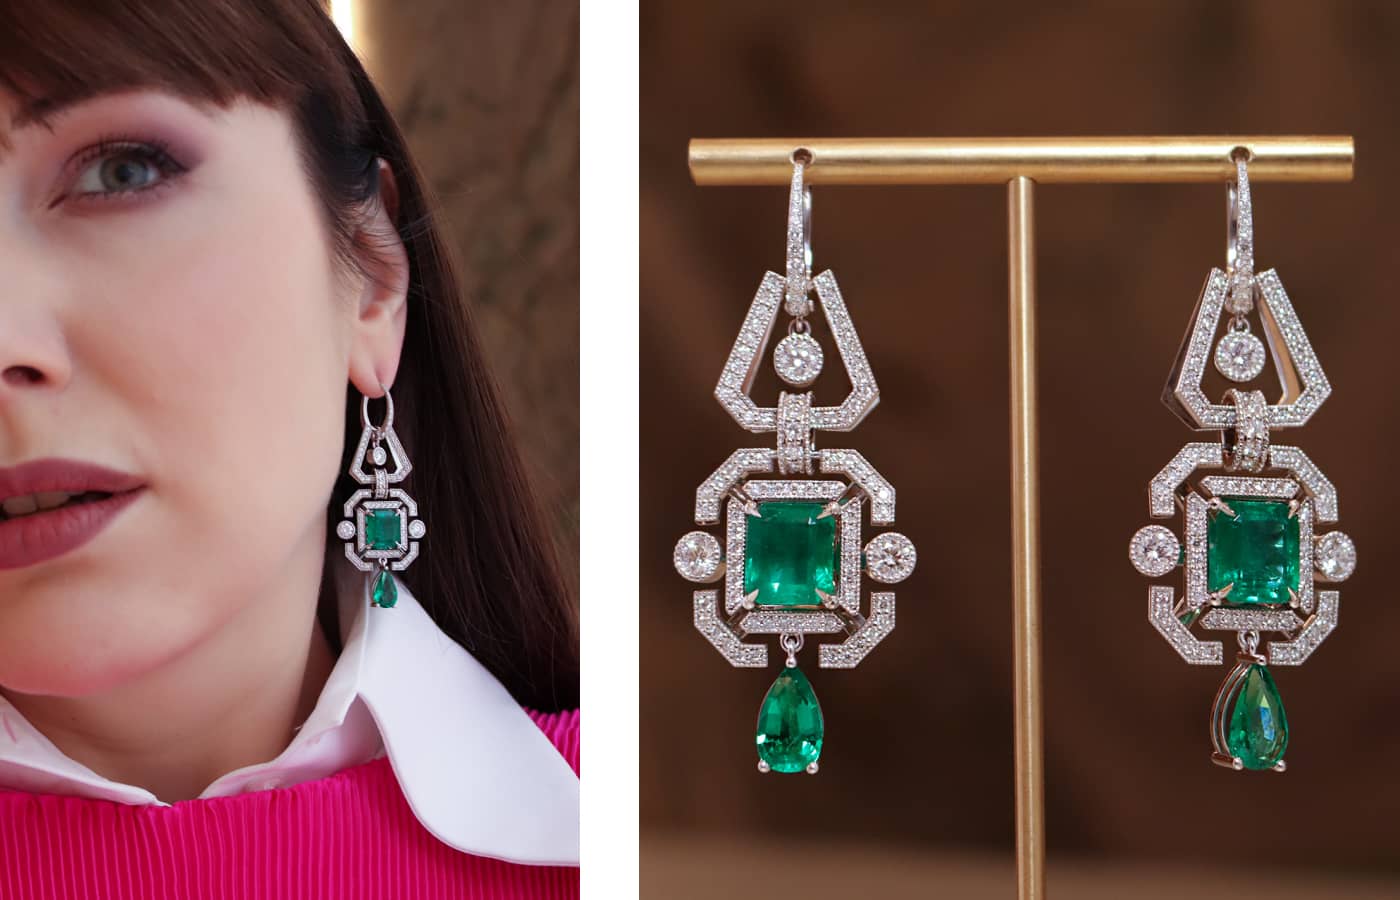 Katerina wears a pair of diamond and emerald Art Deco-inspired earrings by Korbička Šperky